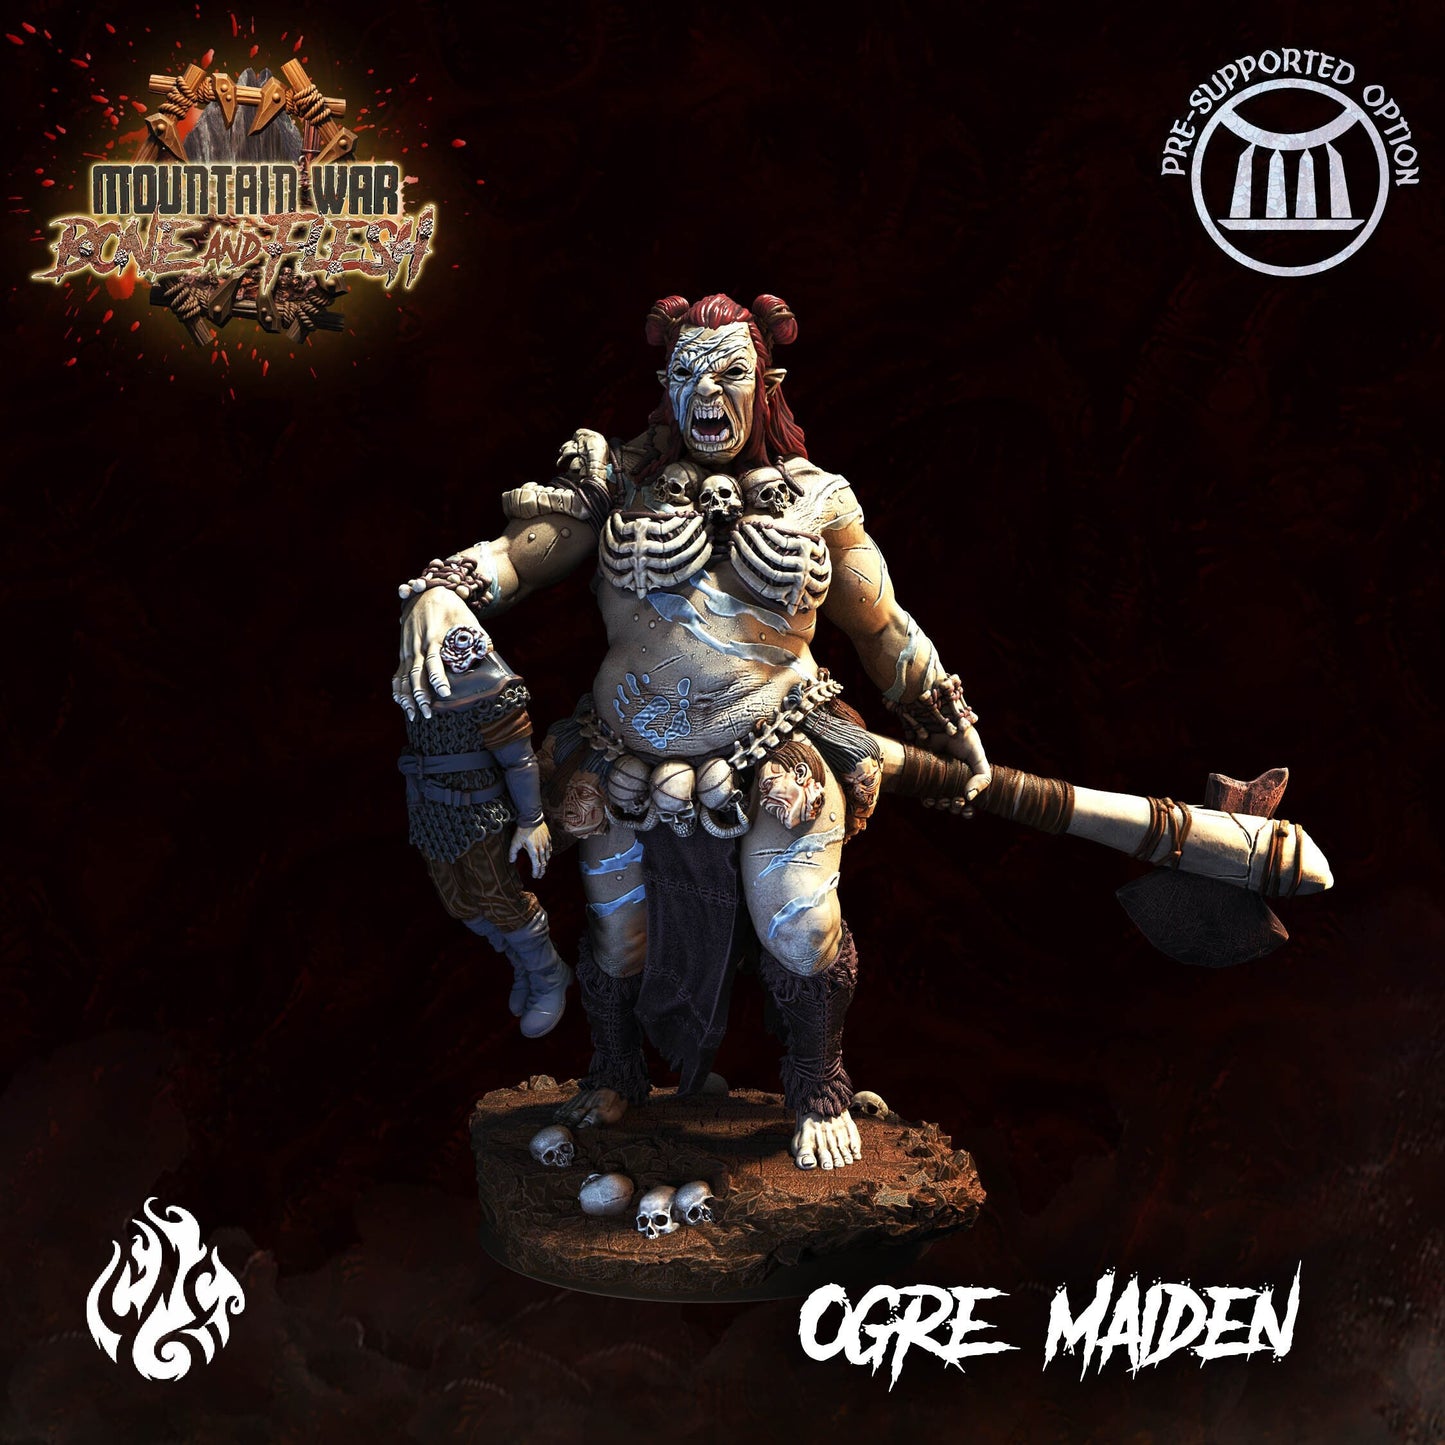 Ogre Maiden Miniature - by Crippled God Foundry | Ogre Warriors | DnD | Dungeons & Dragons | Pathfinder | Warhammer